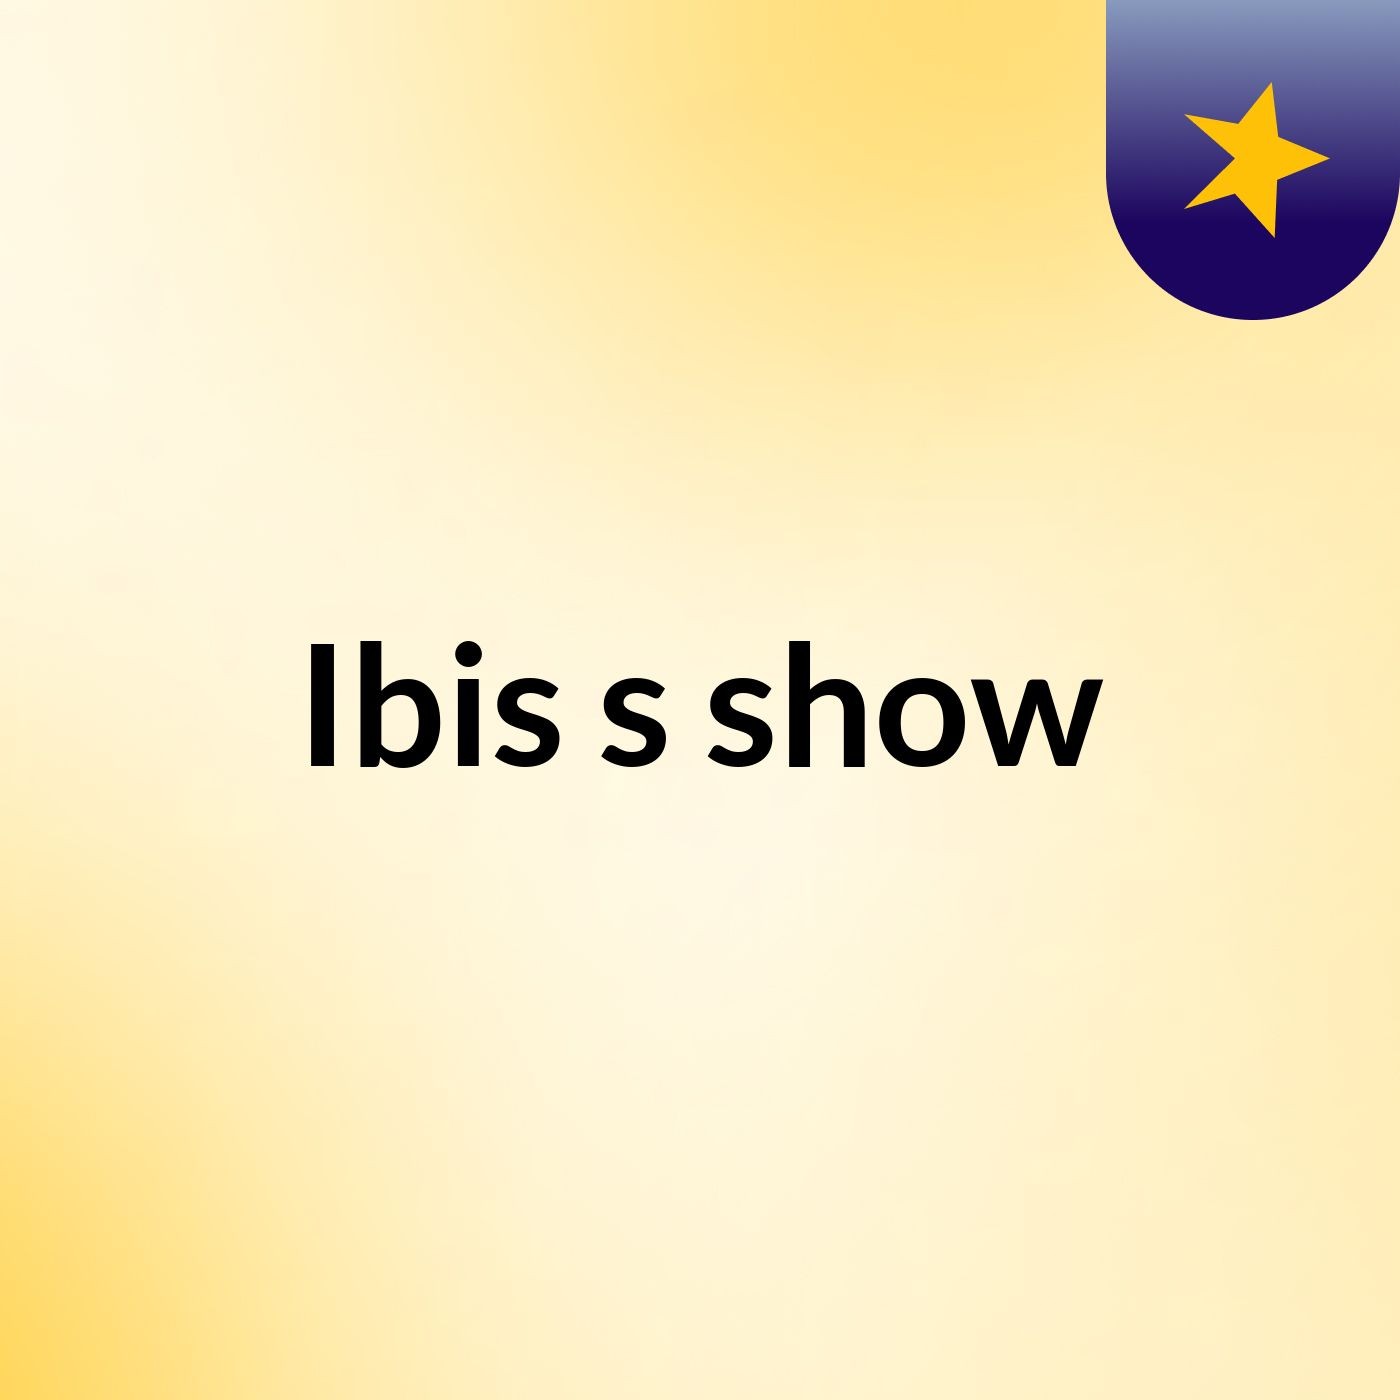 Ibis's show